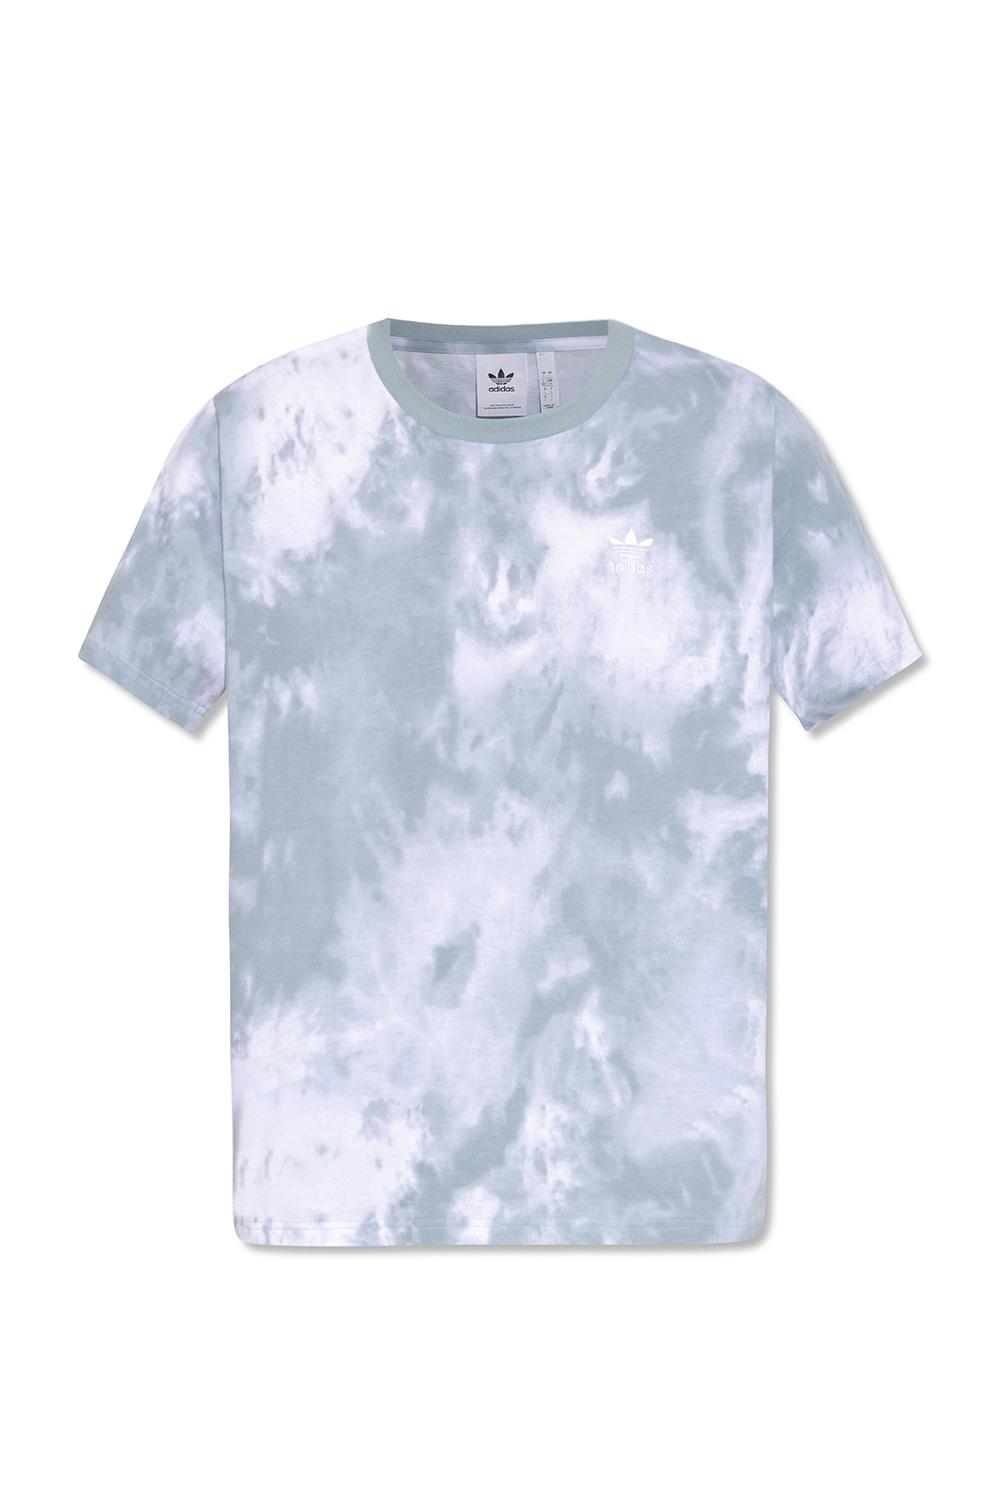 adidas Originals Tie-dye for Gray Lyst in T-shirt Men 